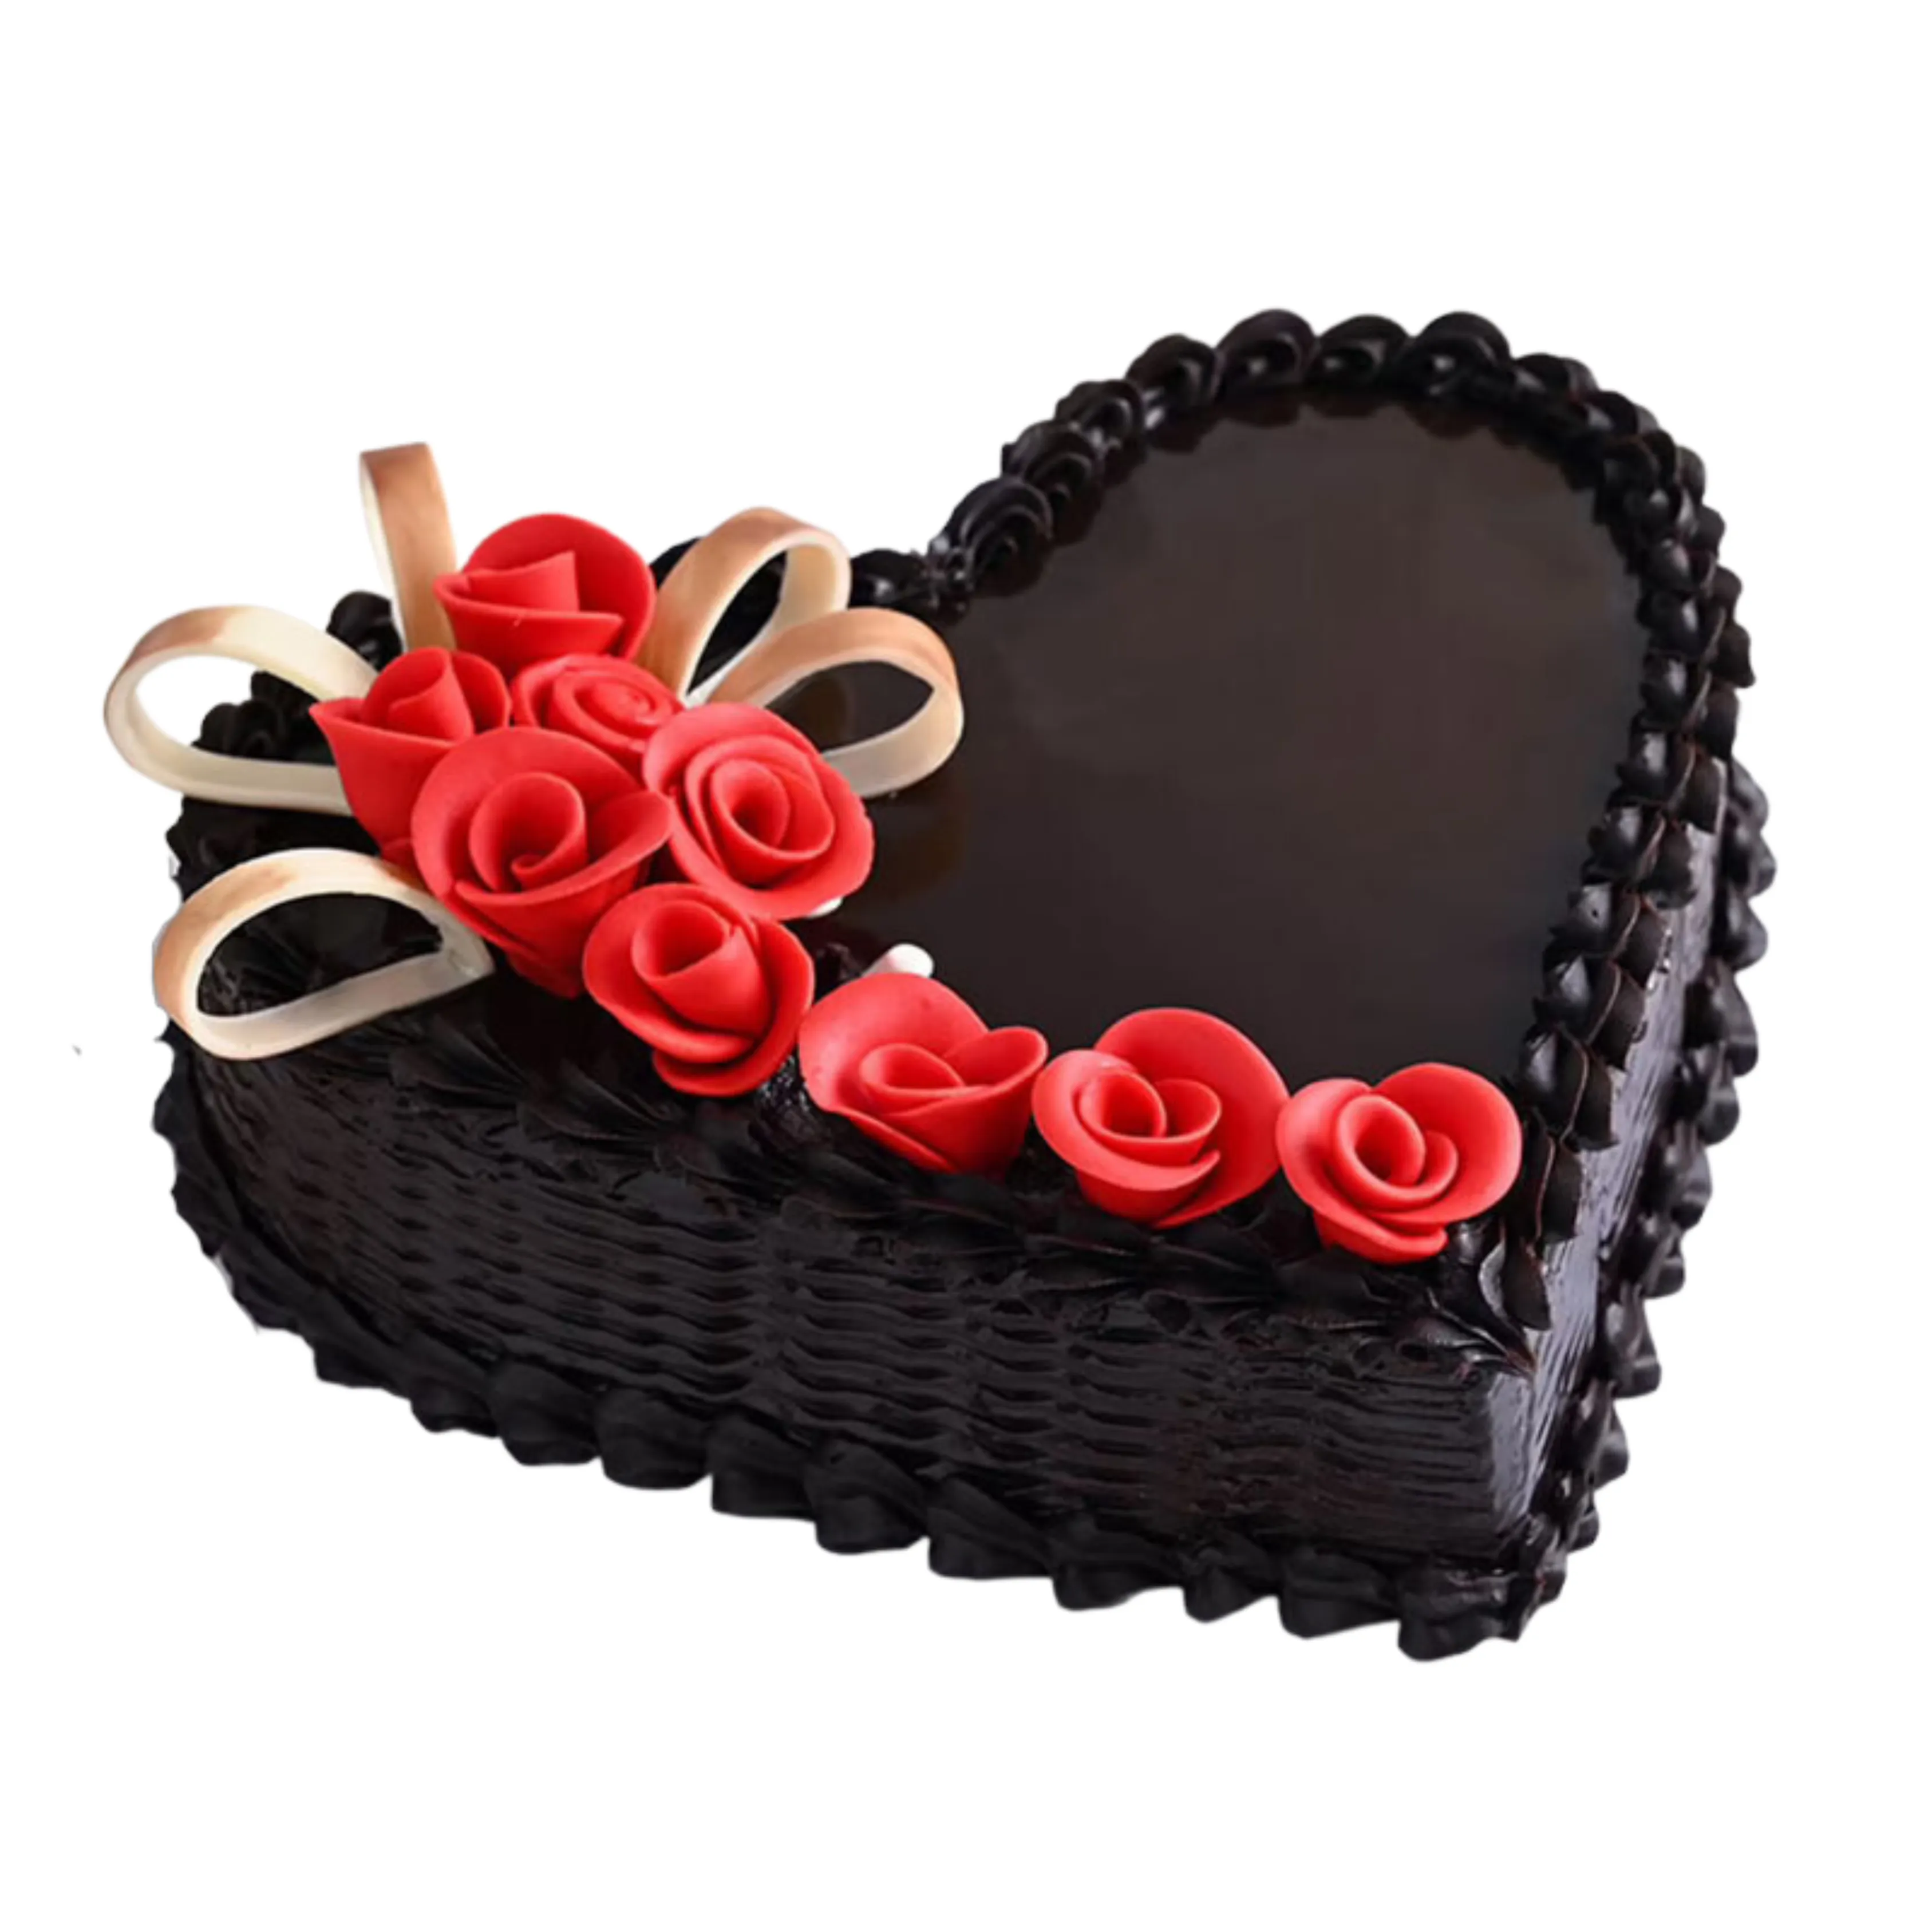 Rose Heart Chocolate Cream Cake for Wedding